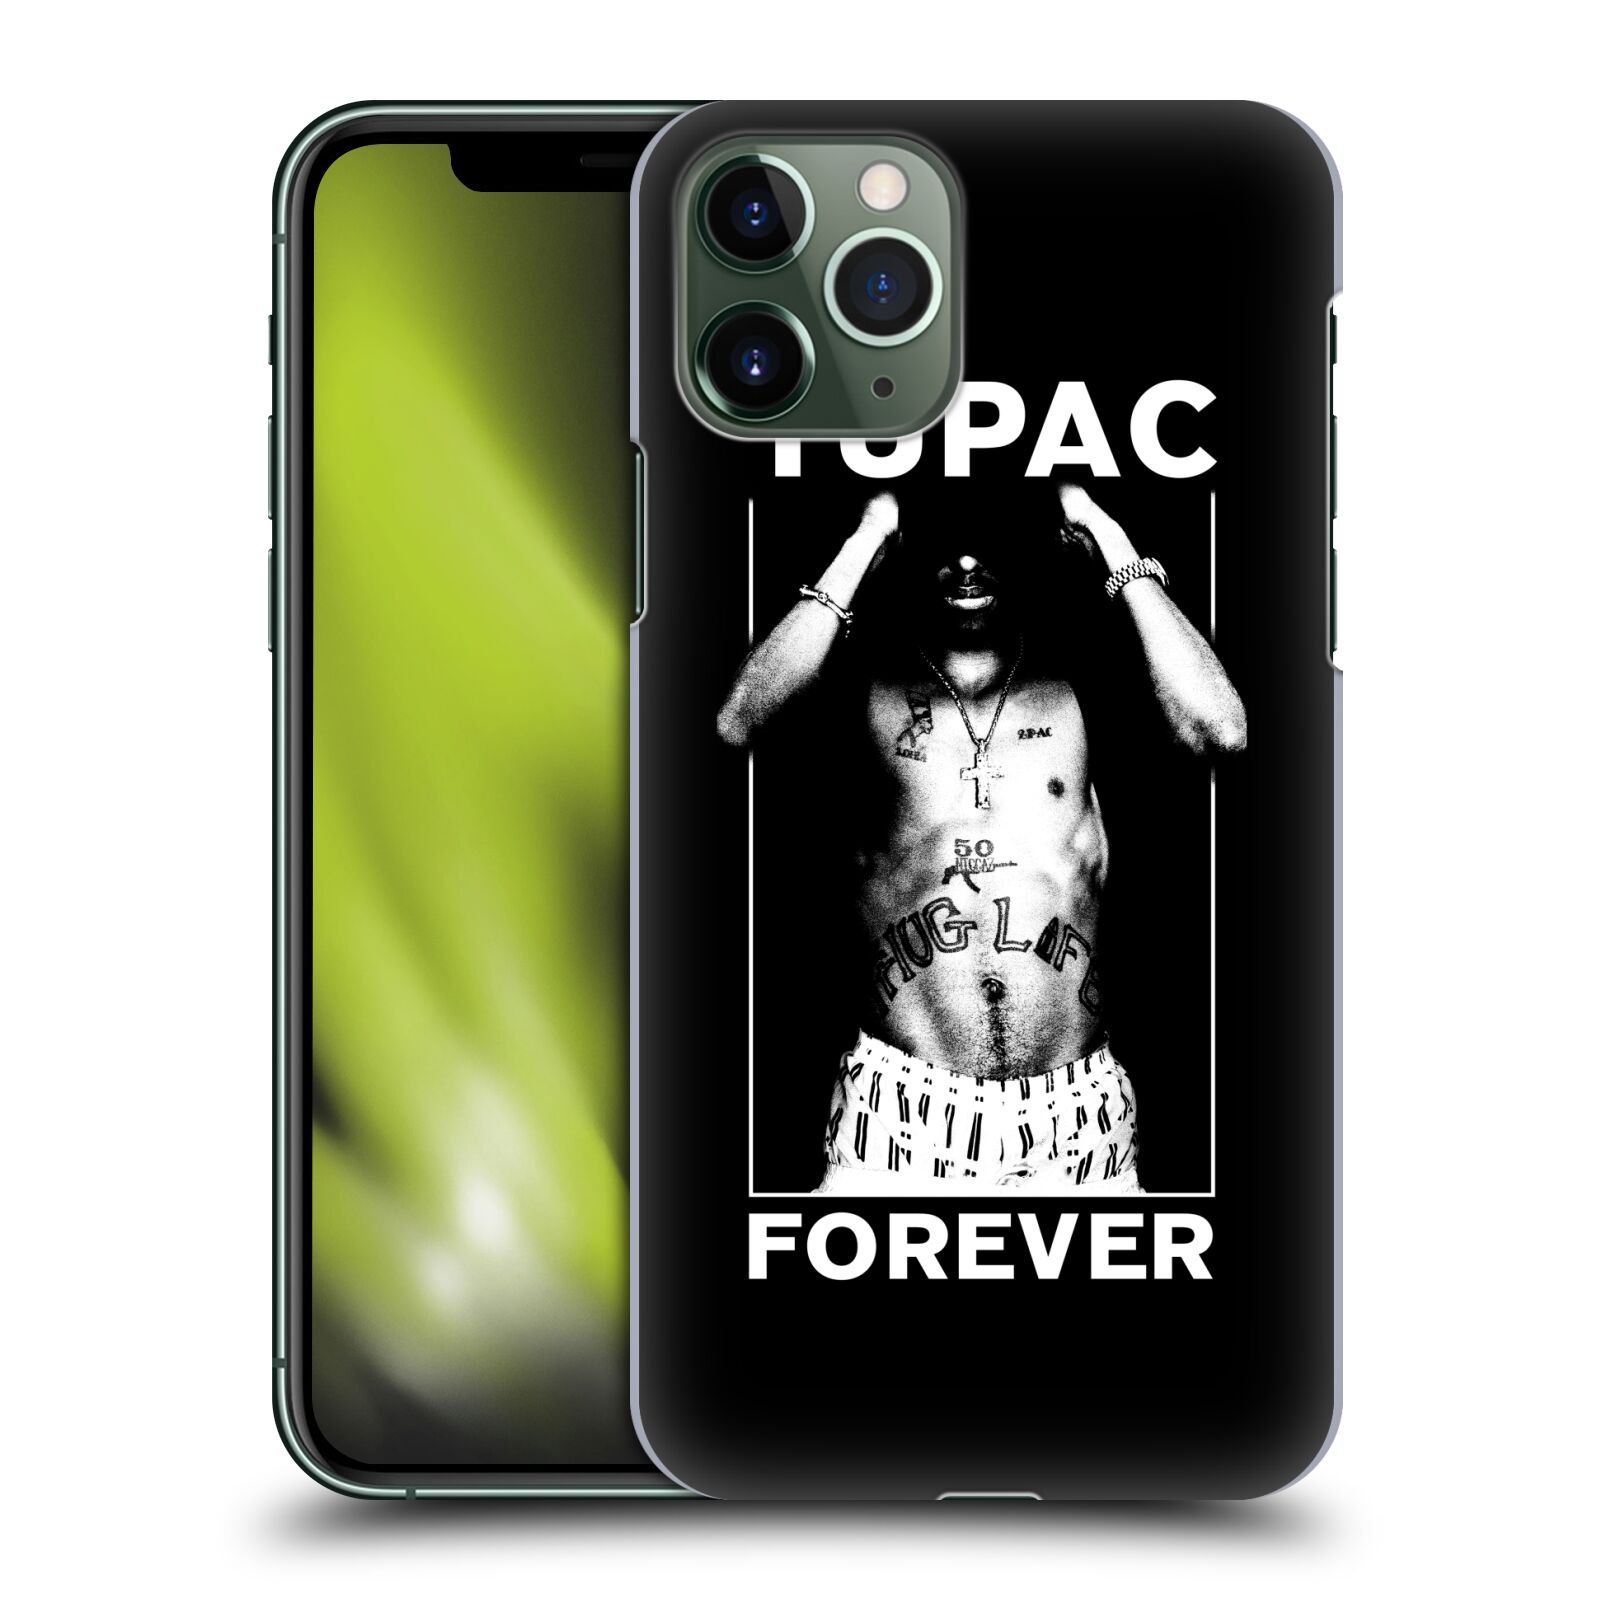 Pouzdro na mobil Apple Iphone 11 PRO - HEAD CASE - Zpěvák rapper Tupac Shakur 2Pac bílý popisek FOREVER